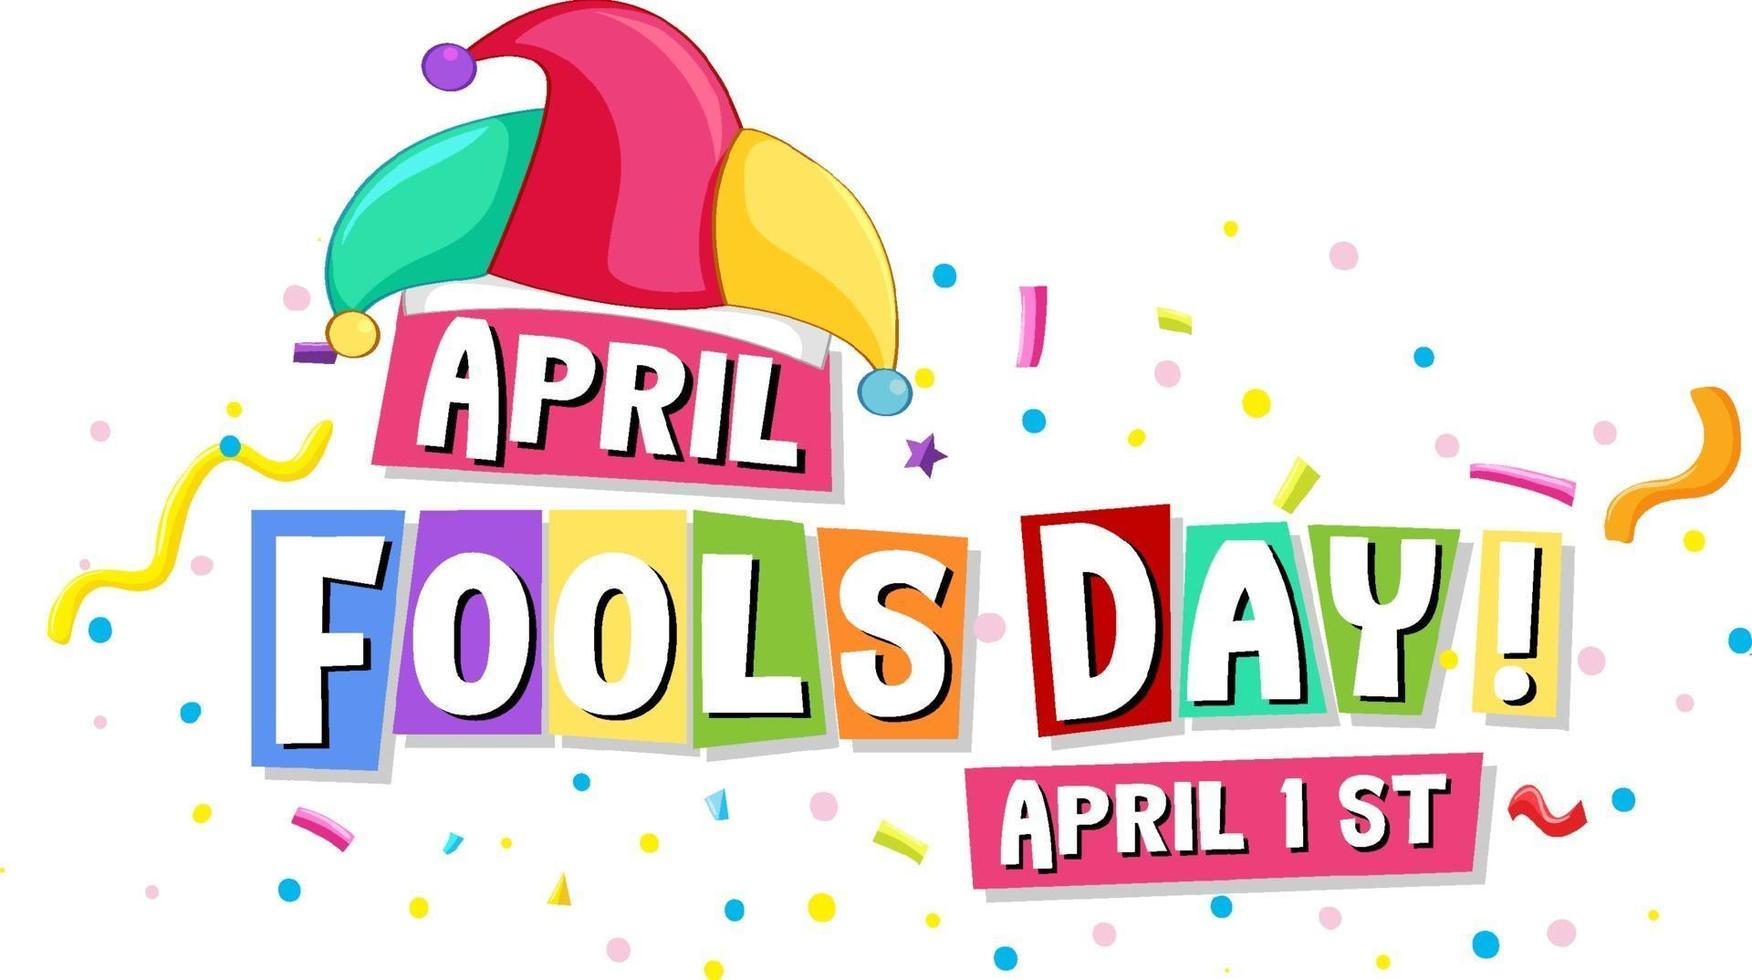 april dwaasdag lettertype logo met narrenhoed en kleurrijke confetti vector